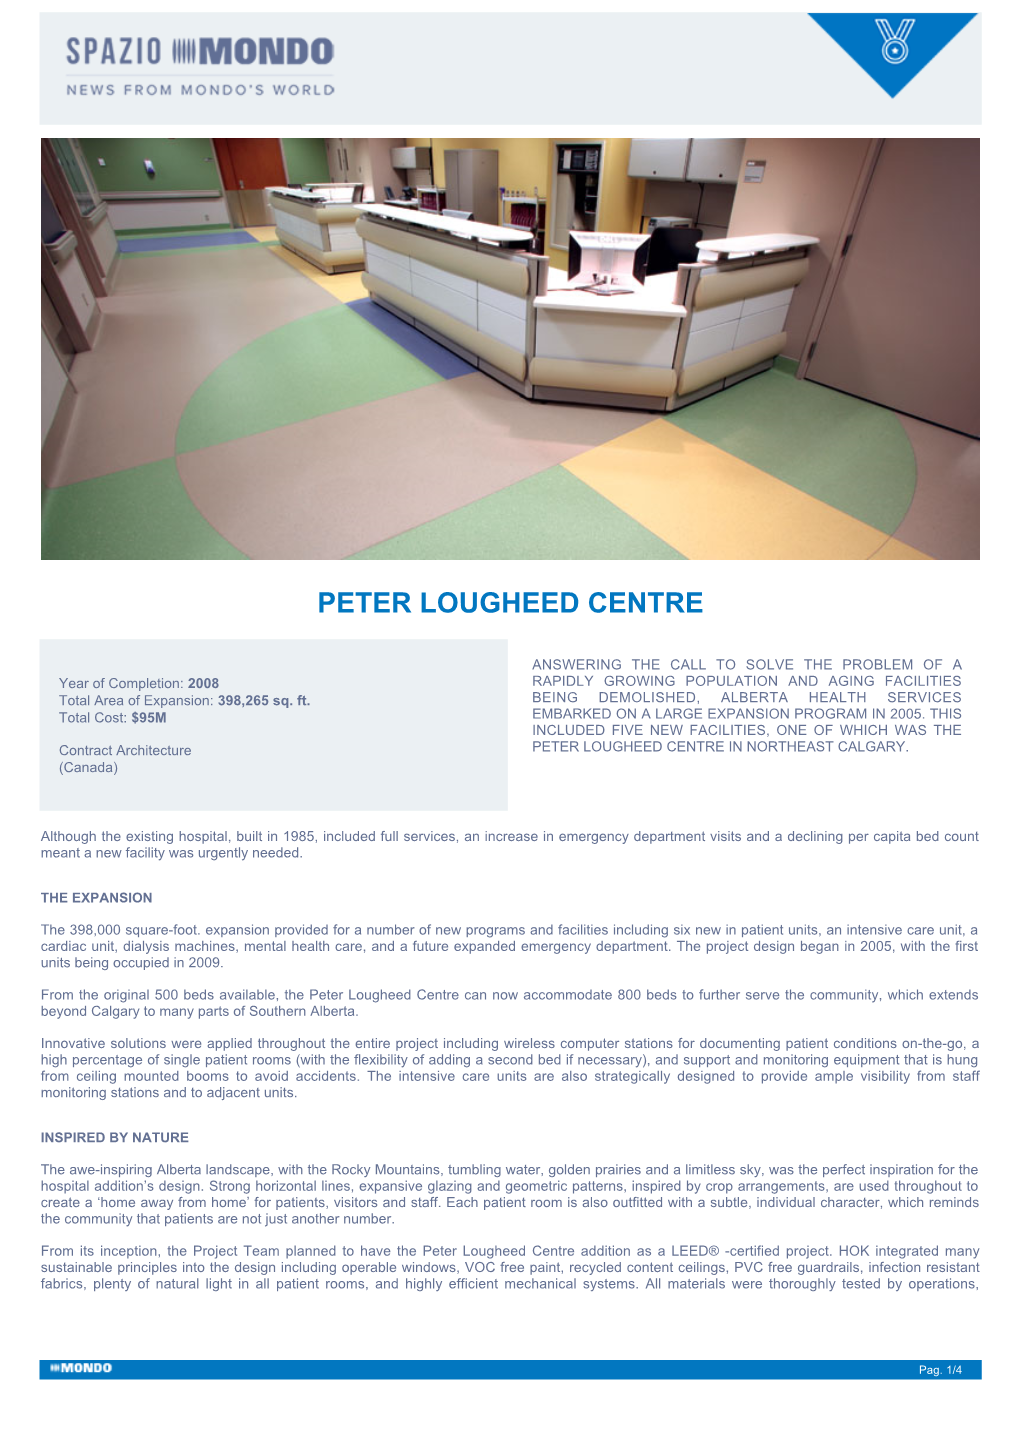 Peter Lougheed Centre